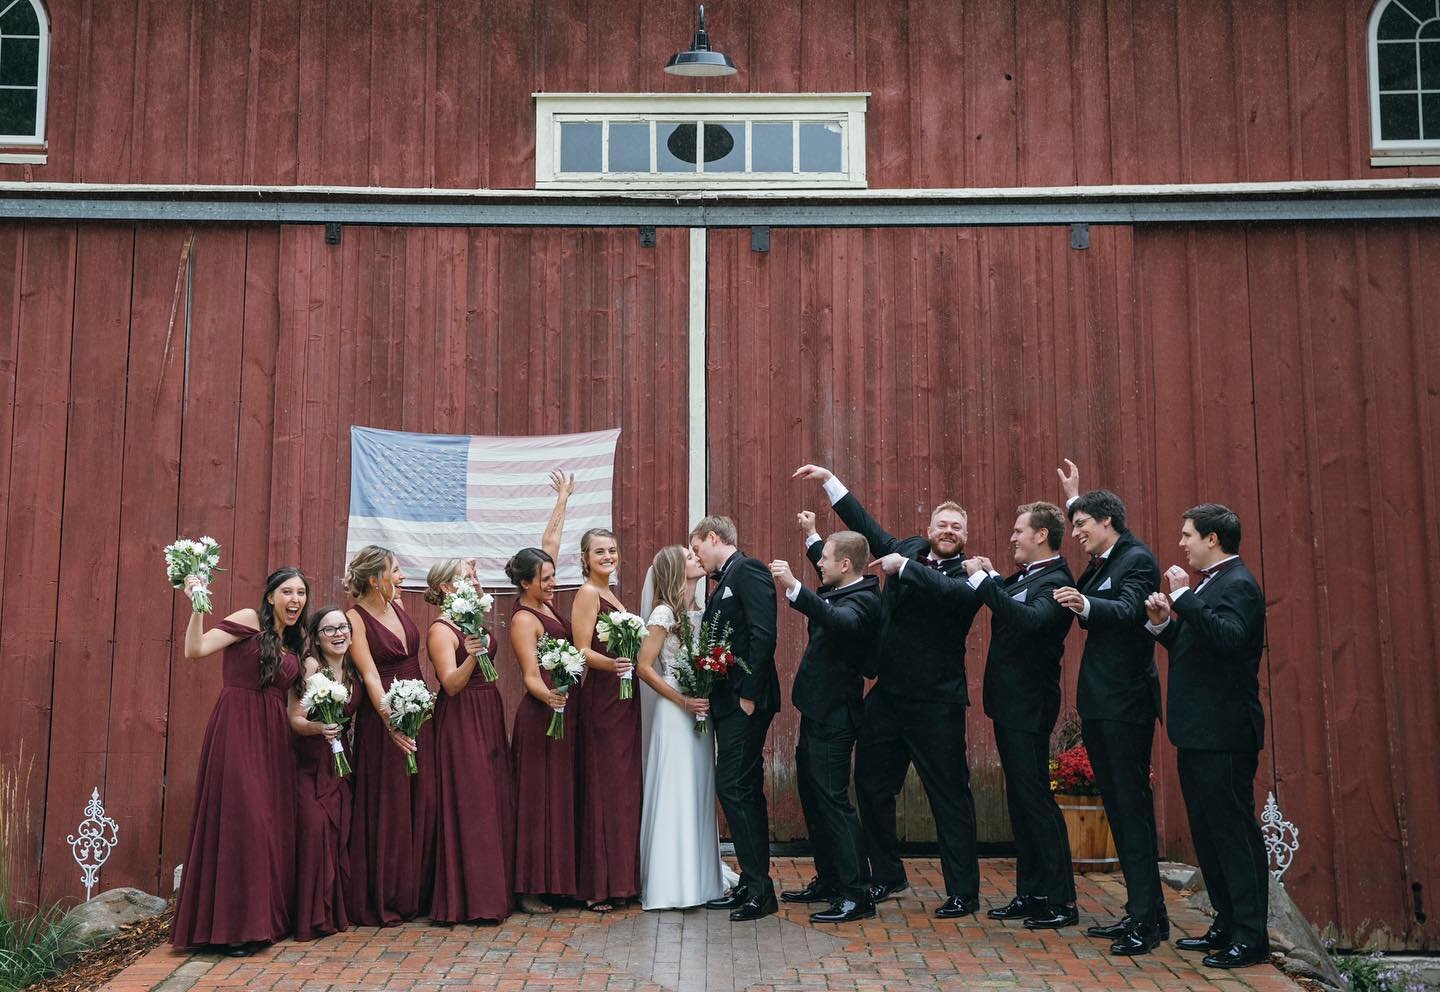 When COVID gives you lemons, go to Wisconsin! 
.
.
.
#covidwedding #minnesotacouple #wisconsinwedding #weddingday #weddingparty #bridalparty #brideandgroom #horray #weddingphotography #minnesotaweddingphotographer #markfierstphotography #timelesscand